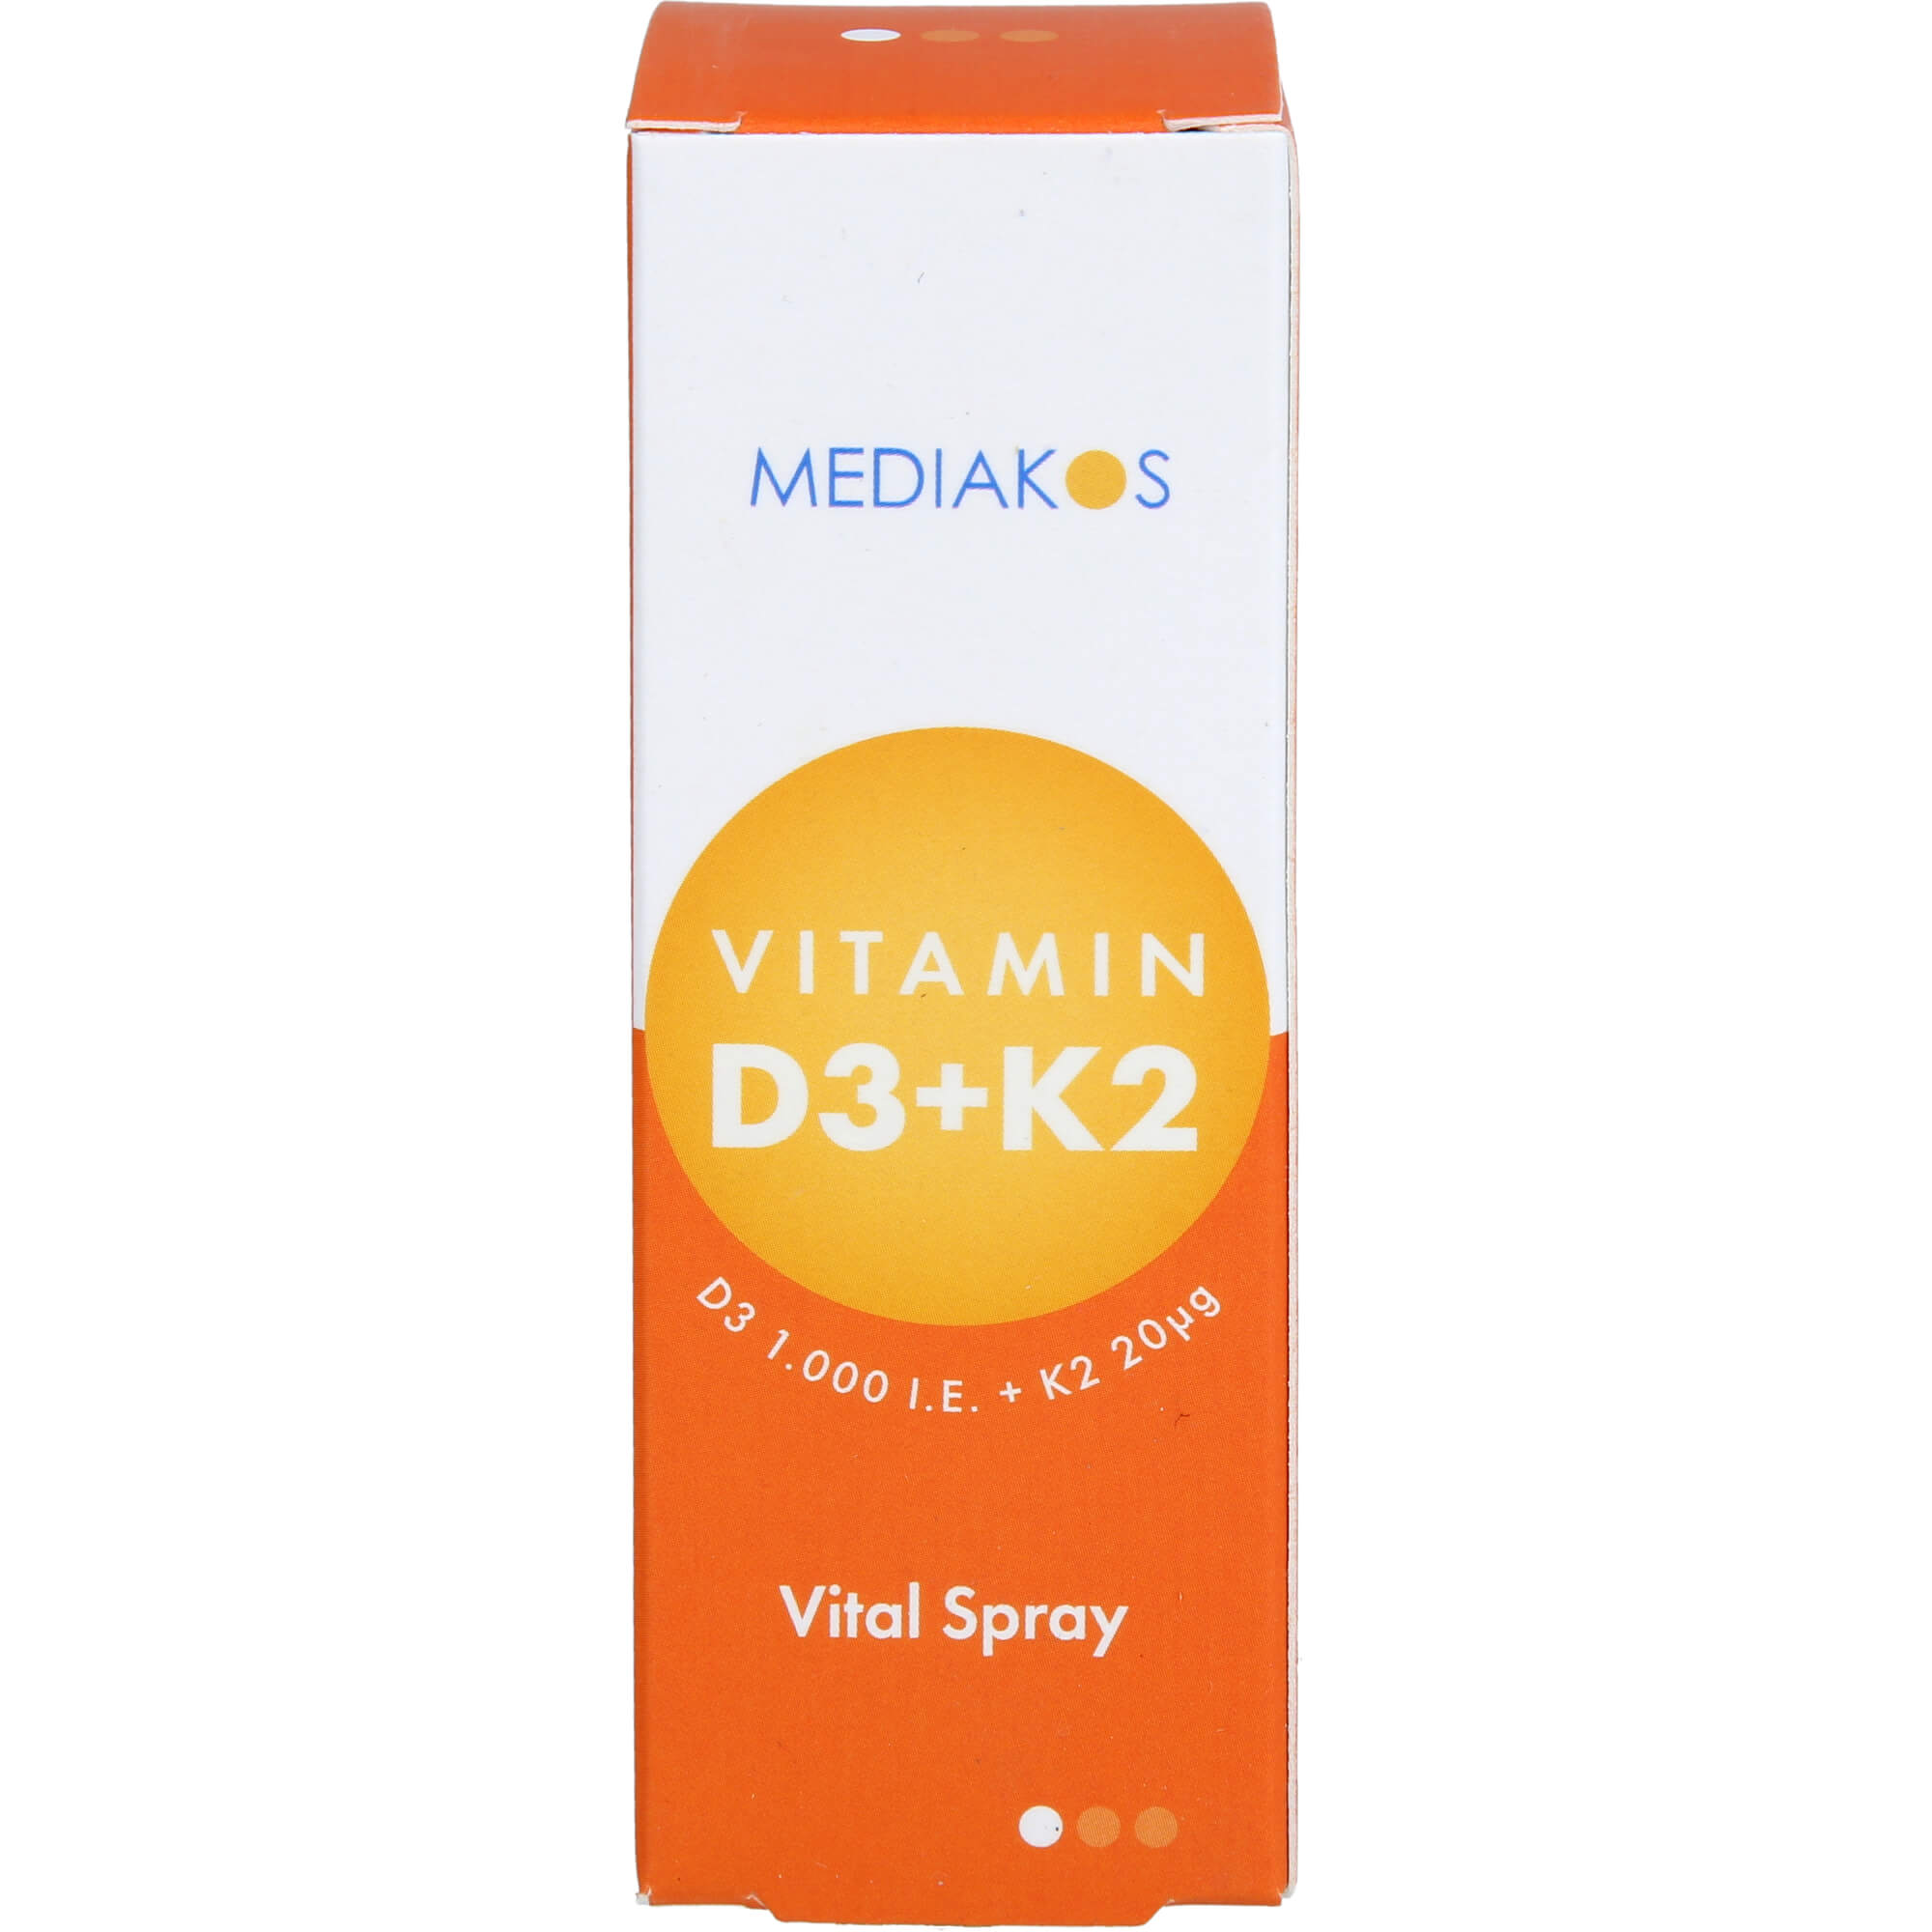 VITAMIN D3+K2 1000 I.E. 20 µg Mediakos Vital Spray